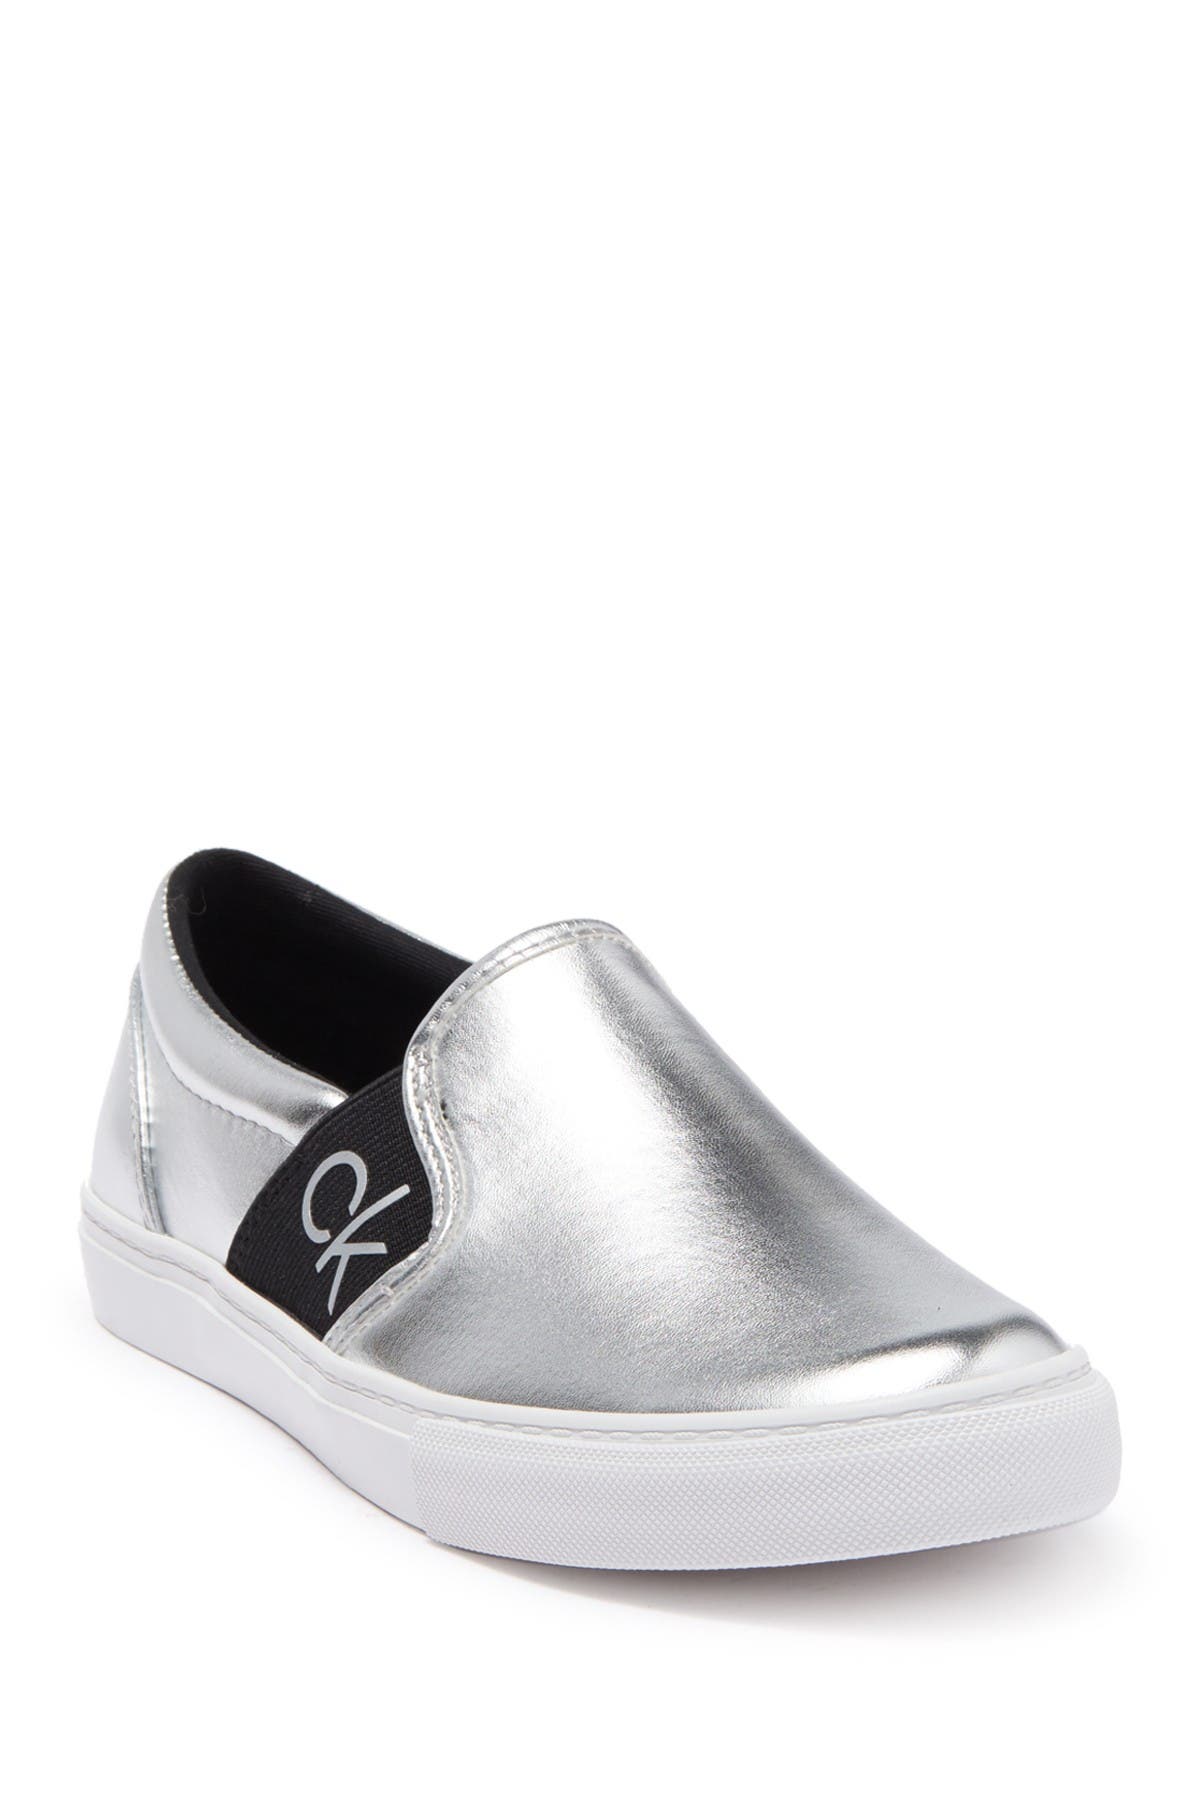 Calvin Klein Gaia Slip-on Sneaker In Open Grey24